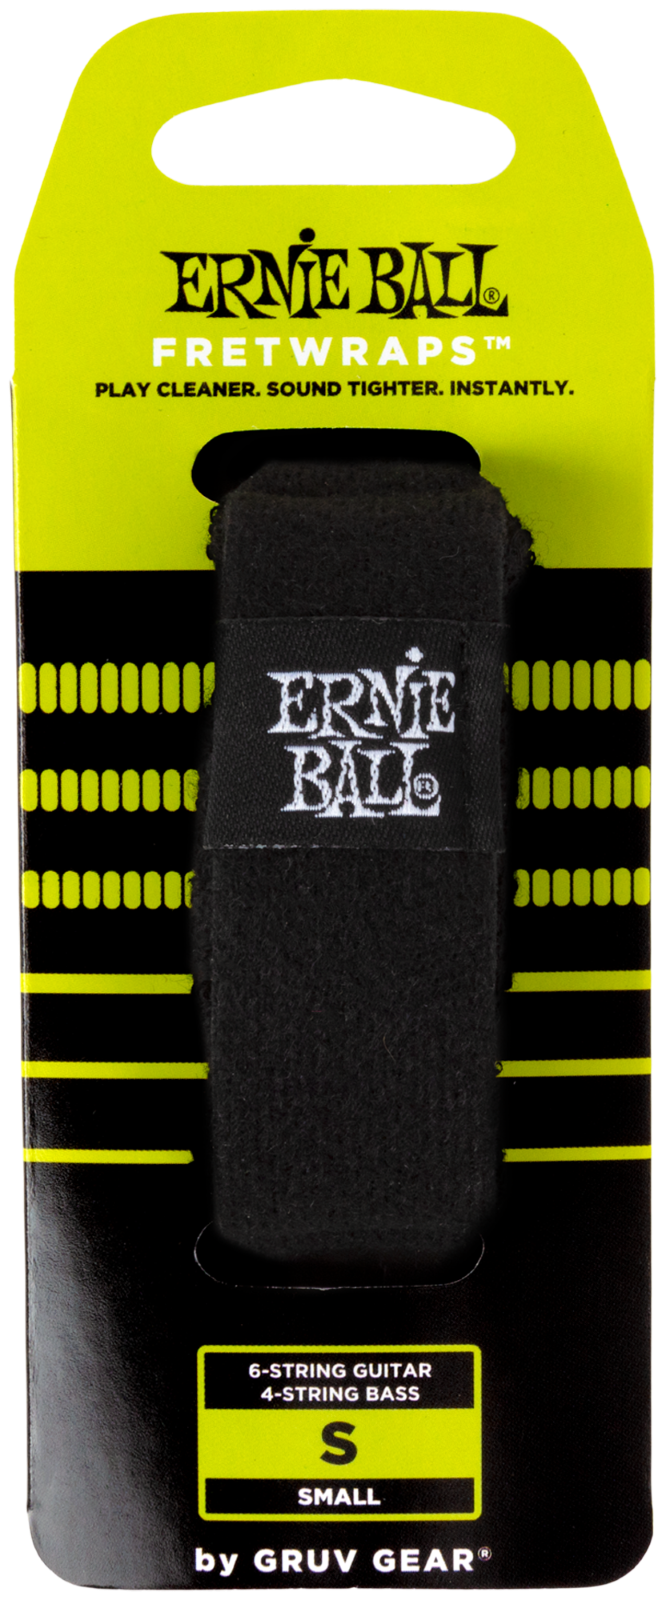 Ernie Ball FretWrap, Gruv Gear, Small : photo 1